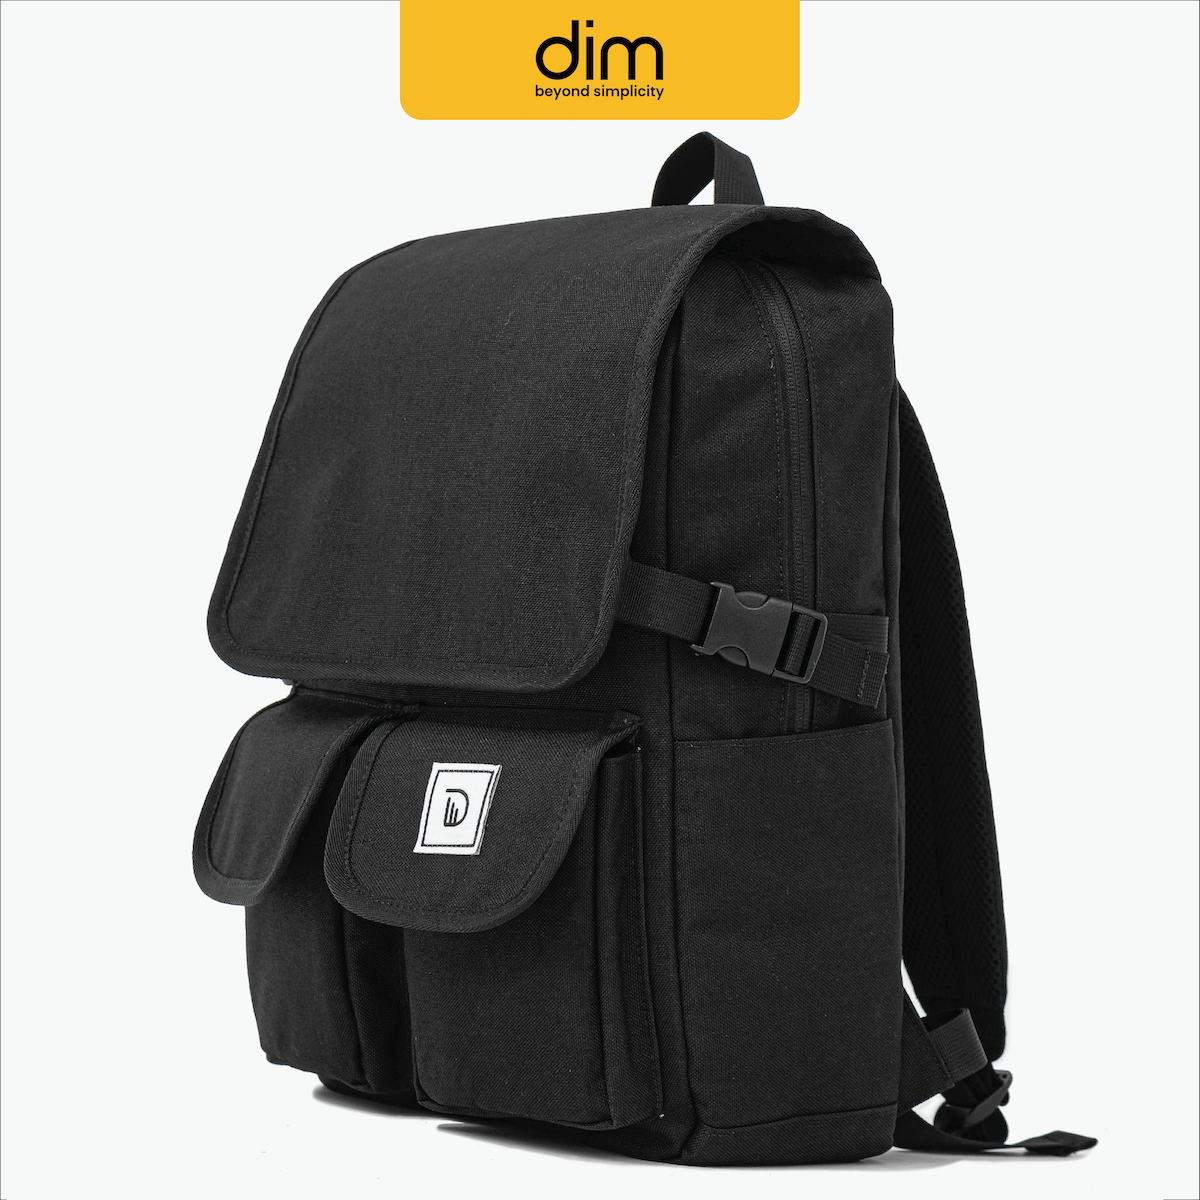 Balo DIM Explorer Backpack - Màu Đen